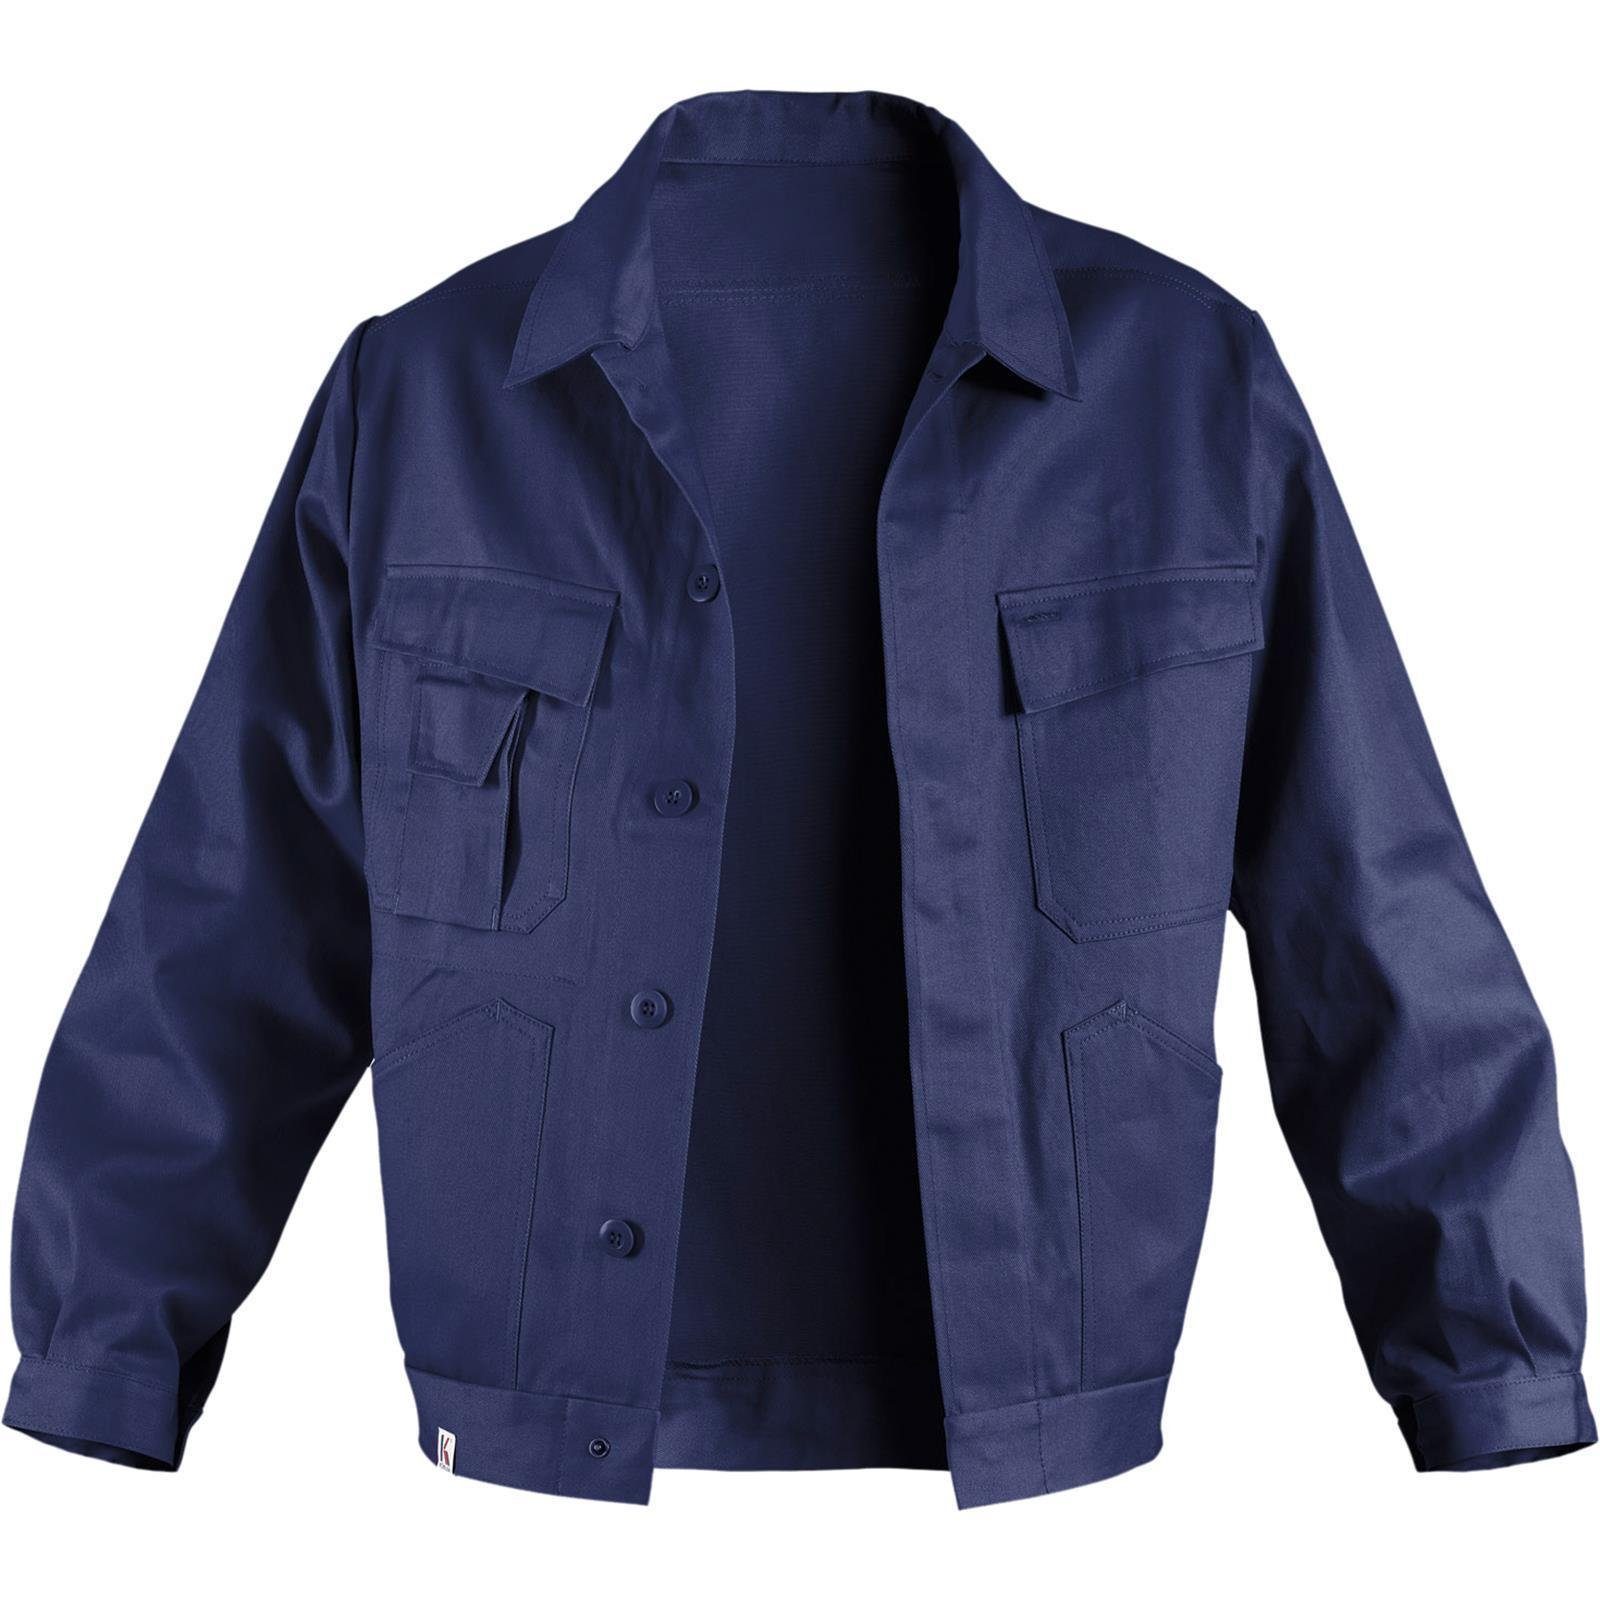 Kübler Arbeitsjacke Kübler Jacke hydronblau 100%Baumwolle | Arbeitsjacken